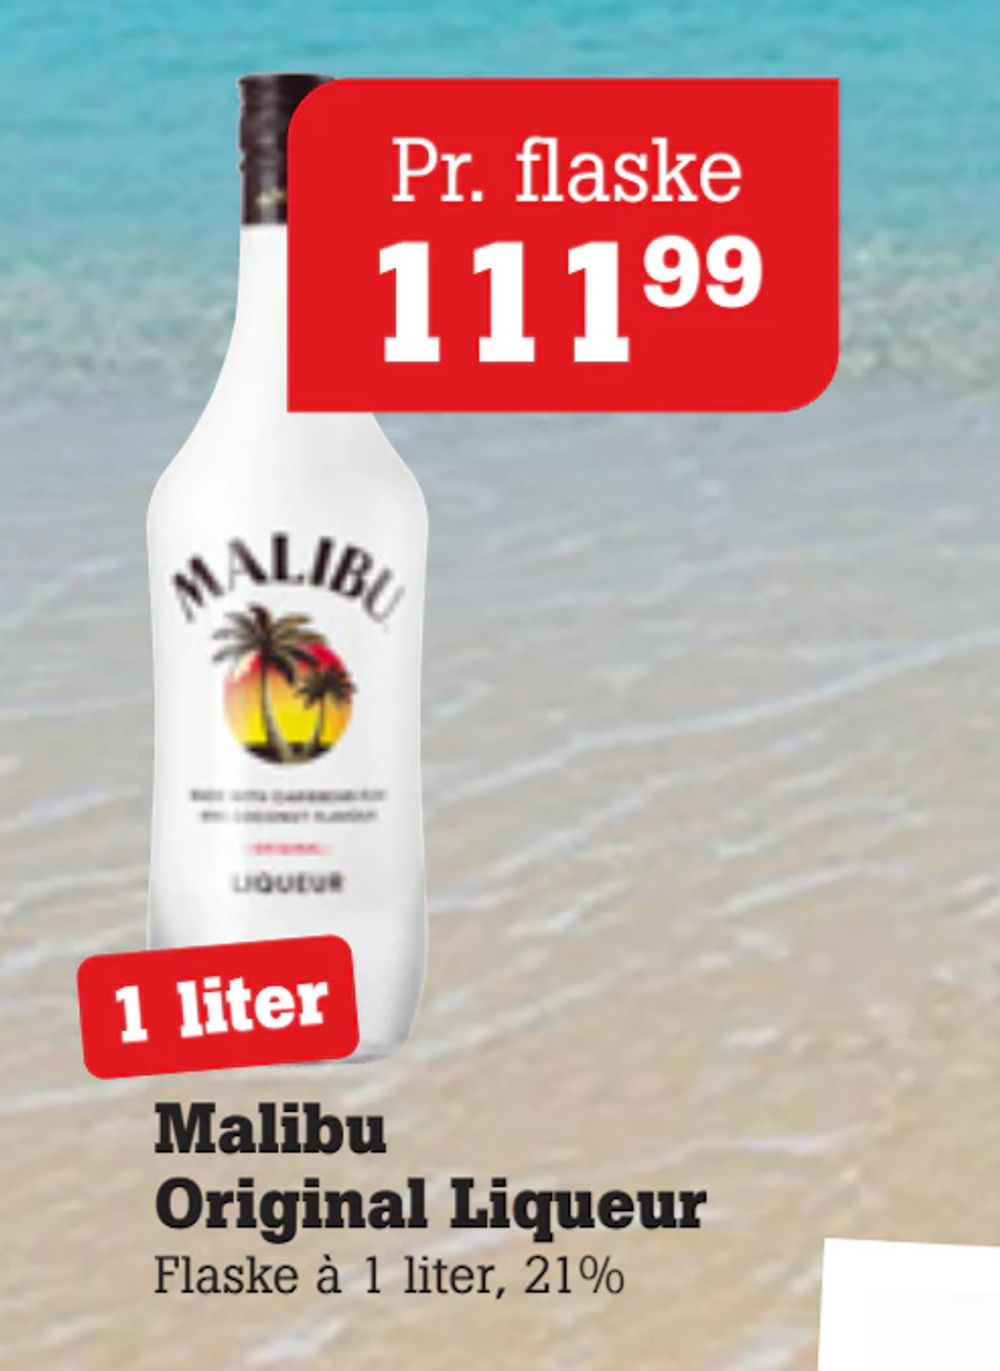 Tilbud på Malibu Original Liqueur fra Poetzsch Padborg til 111,99 kr.